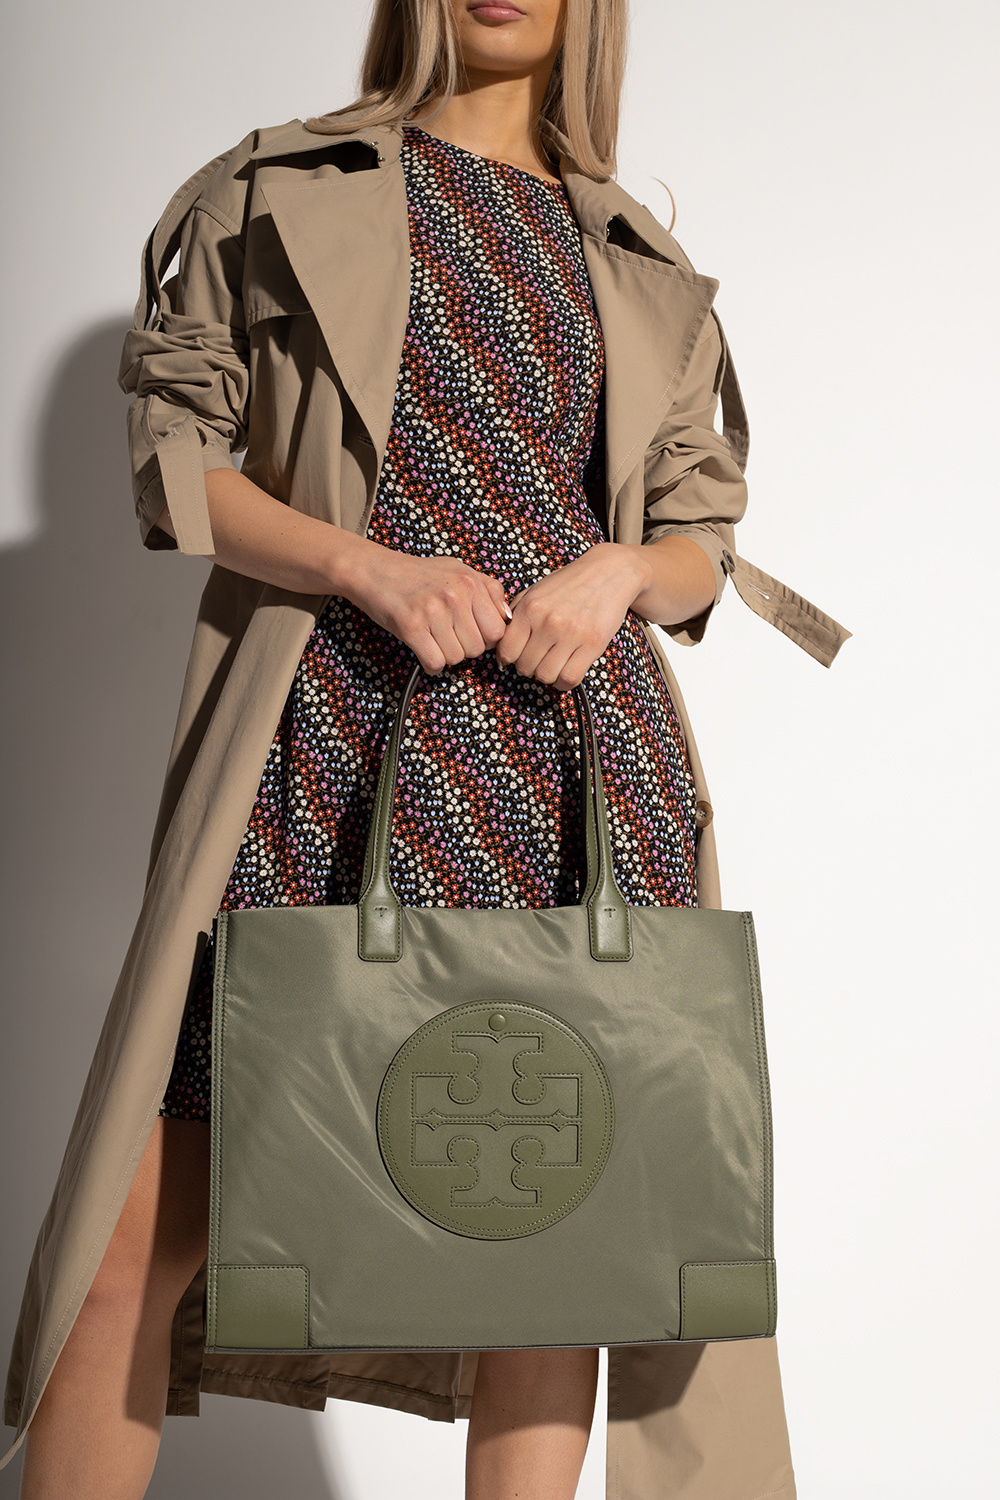 Tory Burch ‘Ella’ shopper public bag